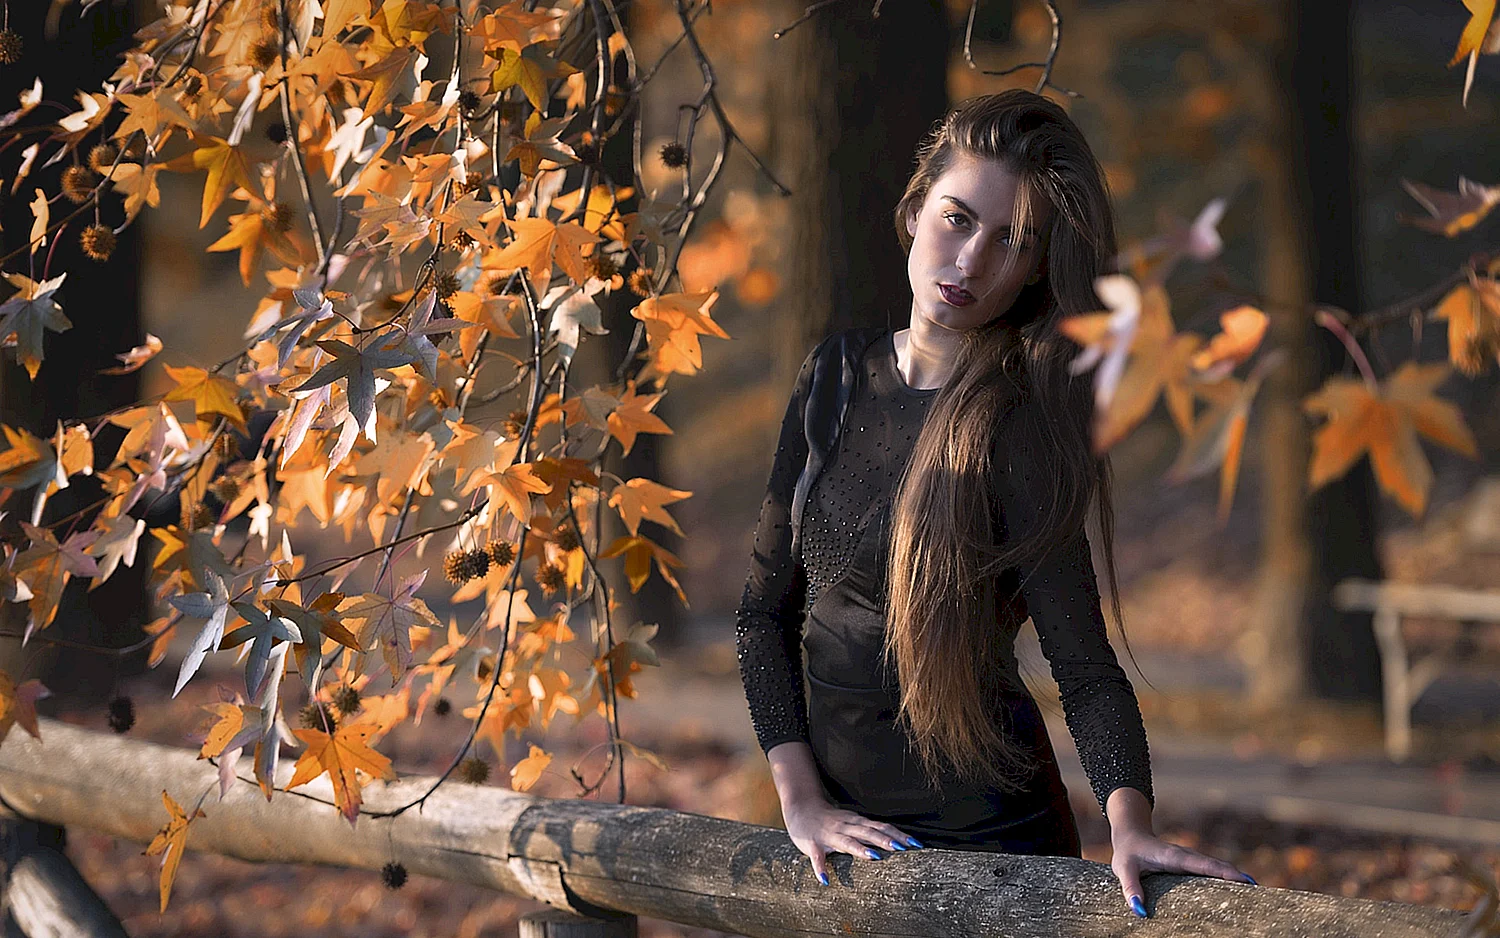 Осенняя фотосессия девушки